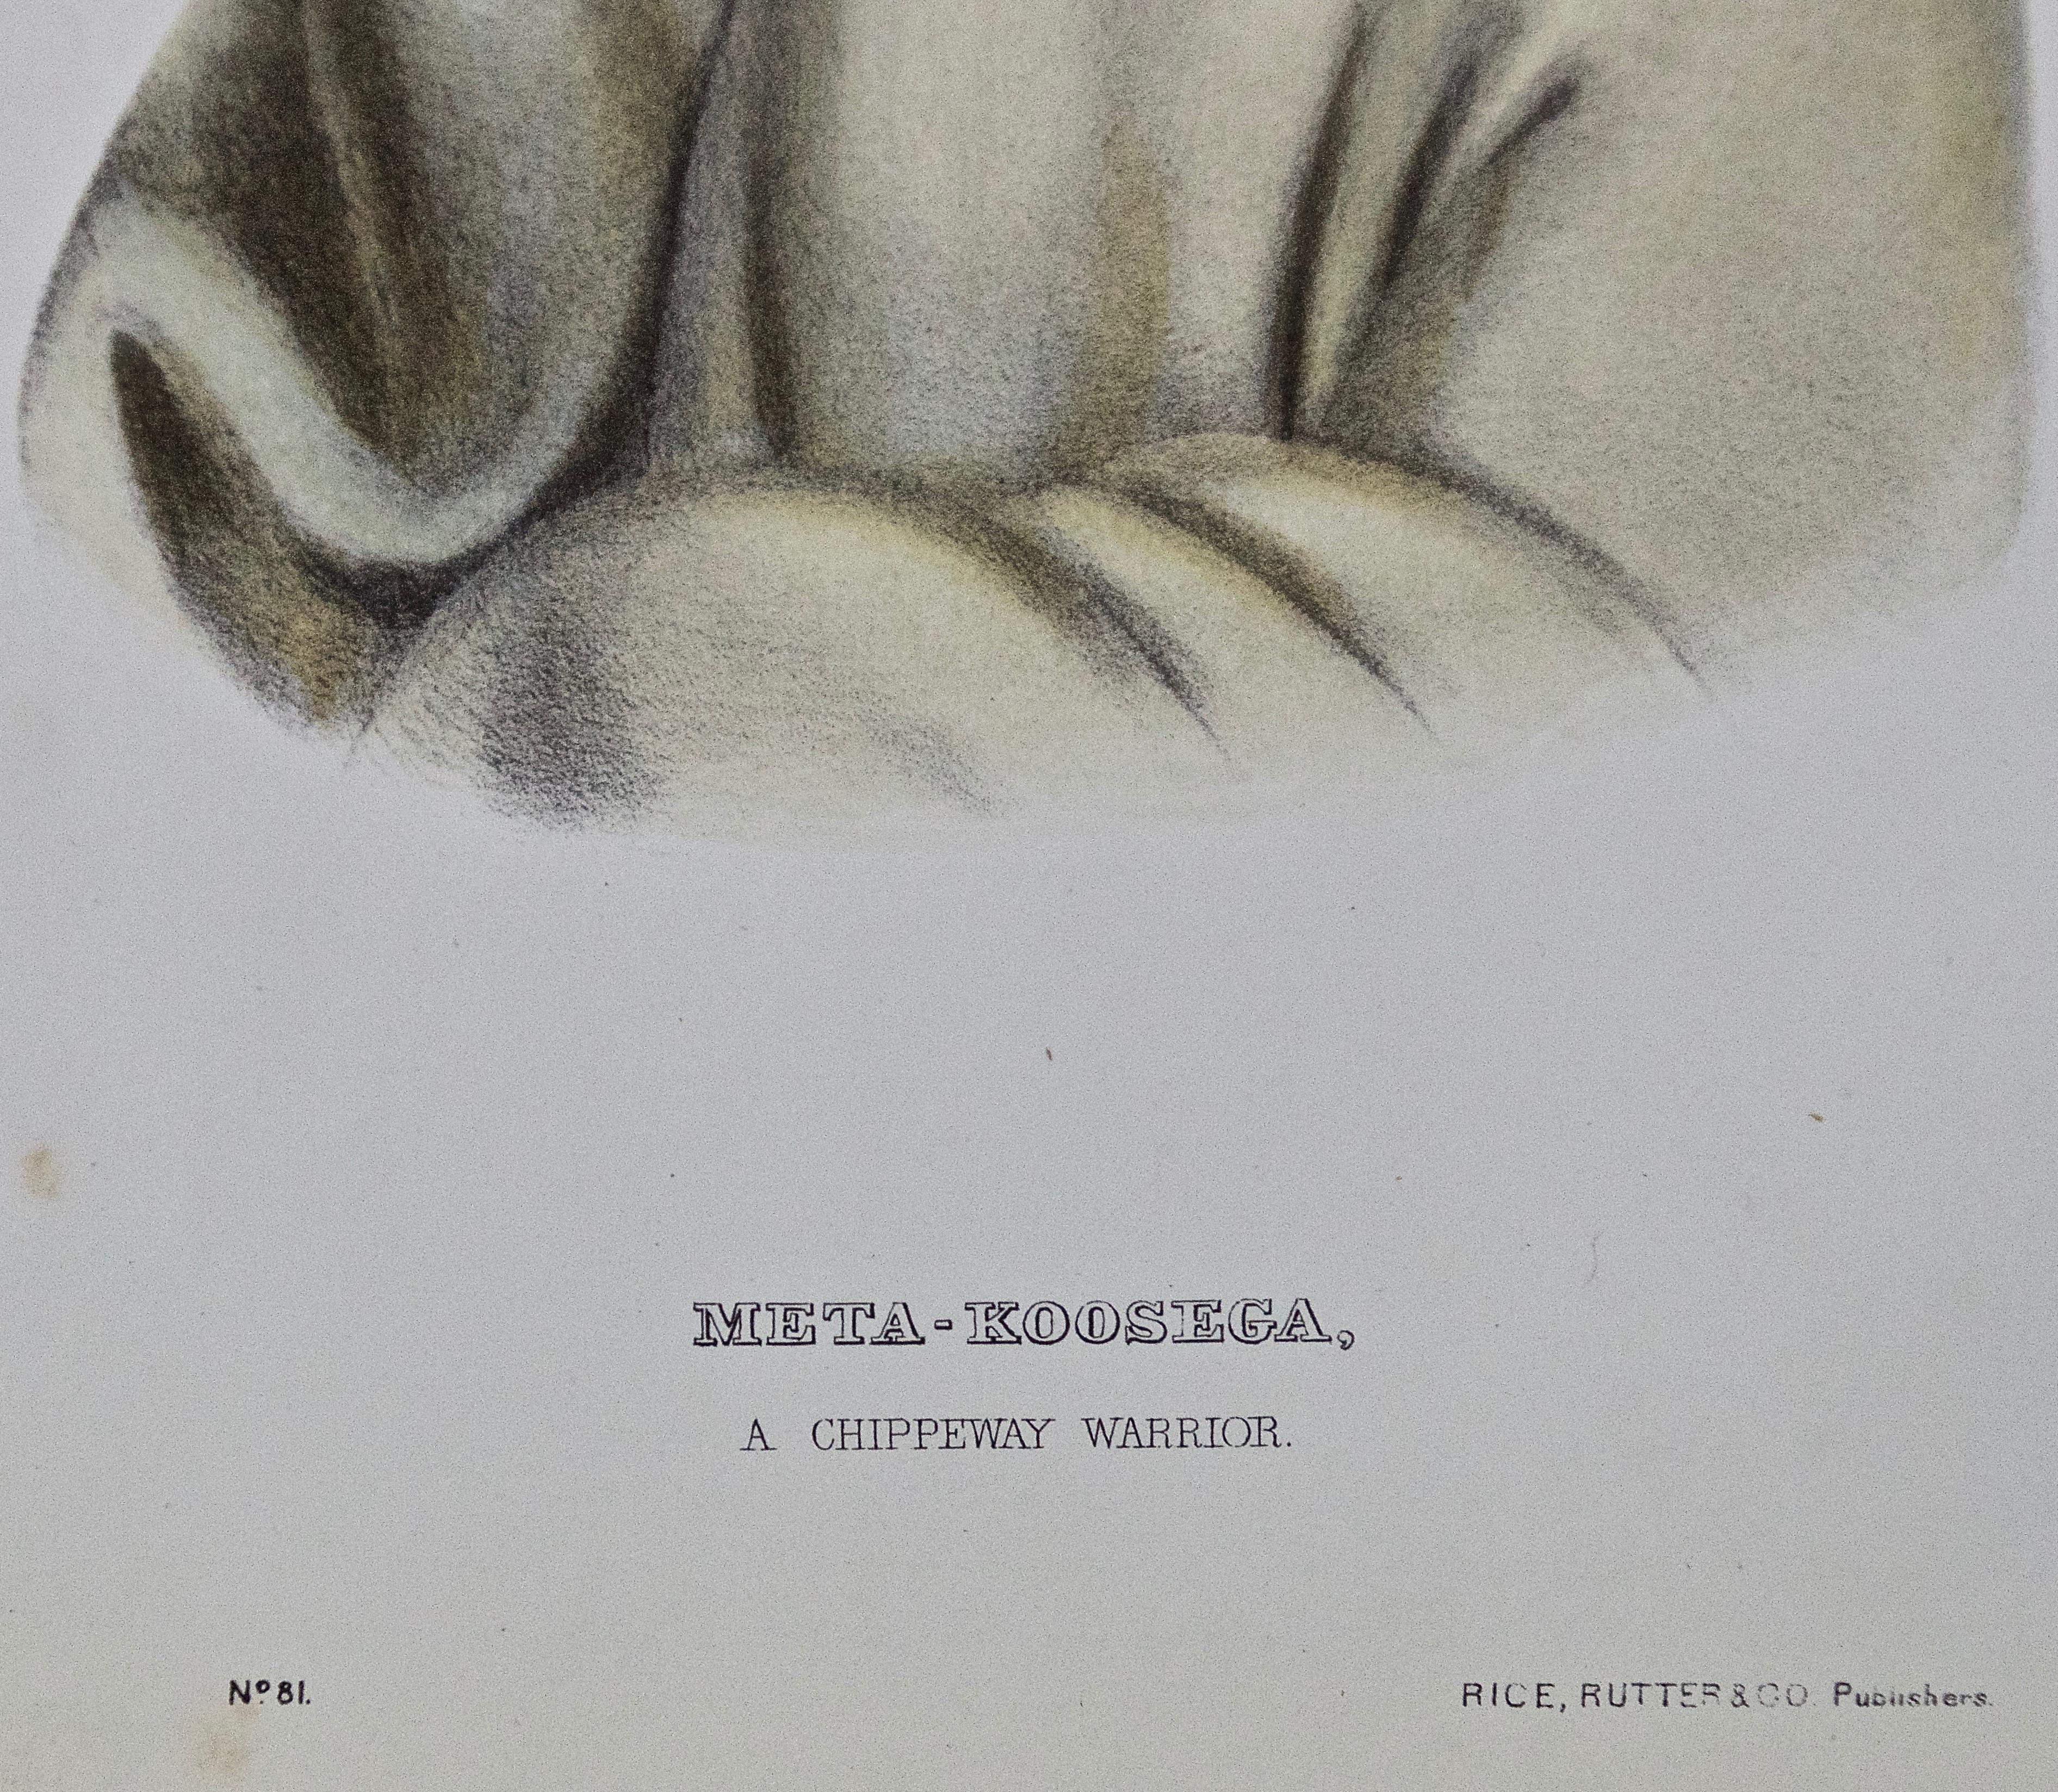 Meta-Koosega Chippeway Warrior: Original Hand-colored McKenney & Hall Lithograph For Sale 1